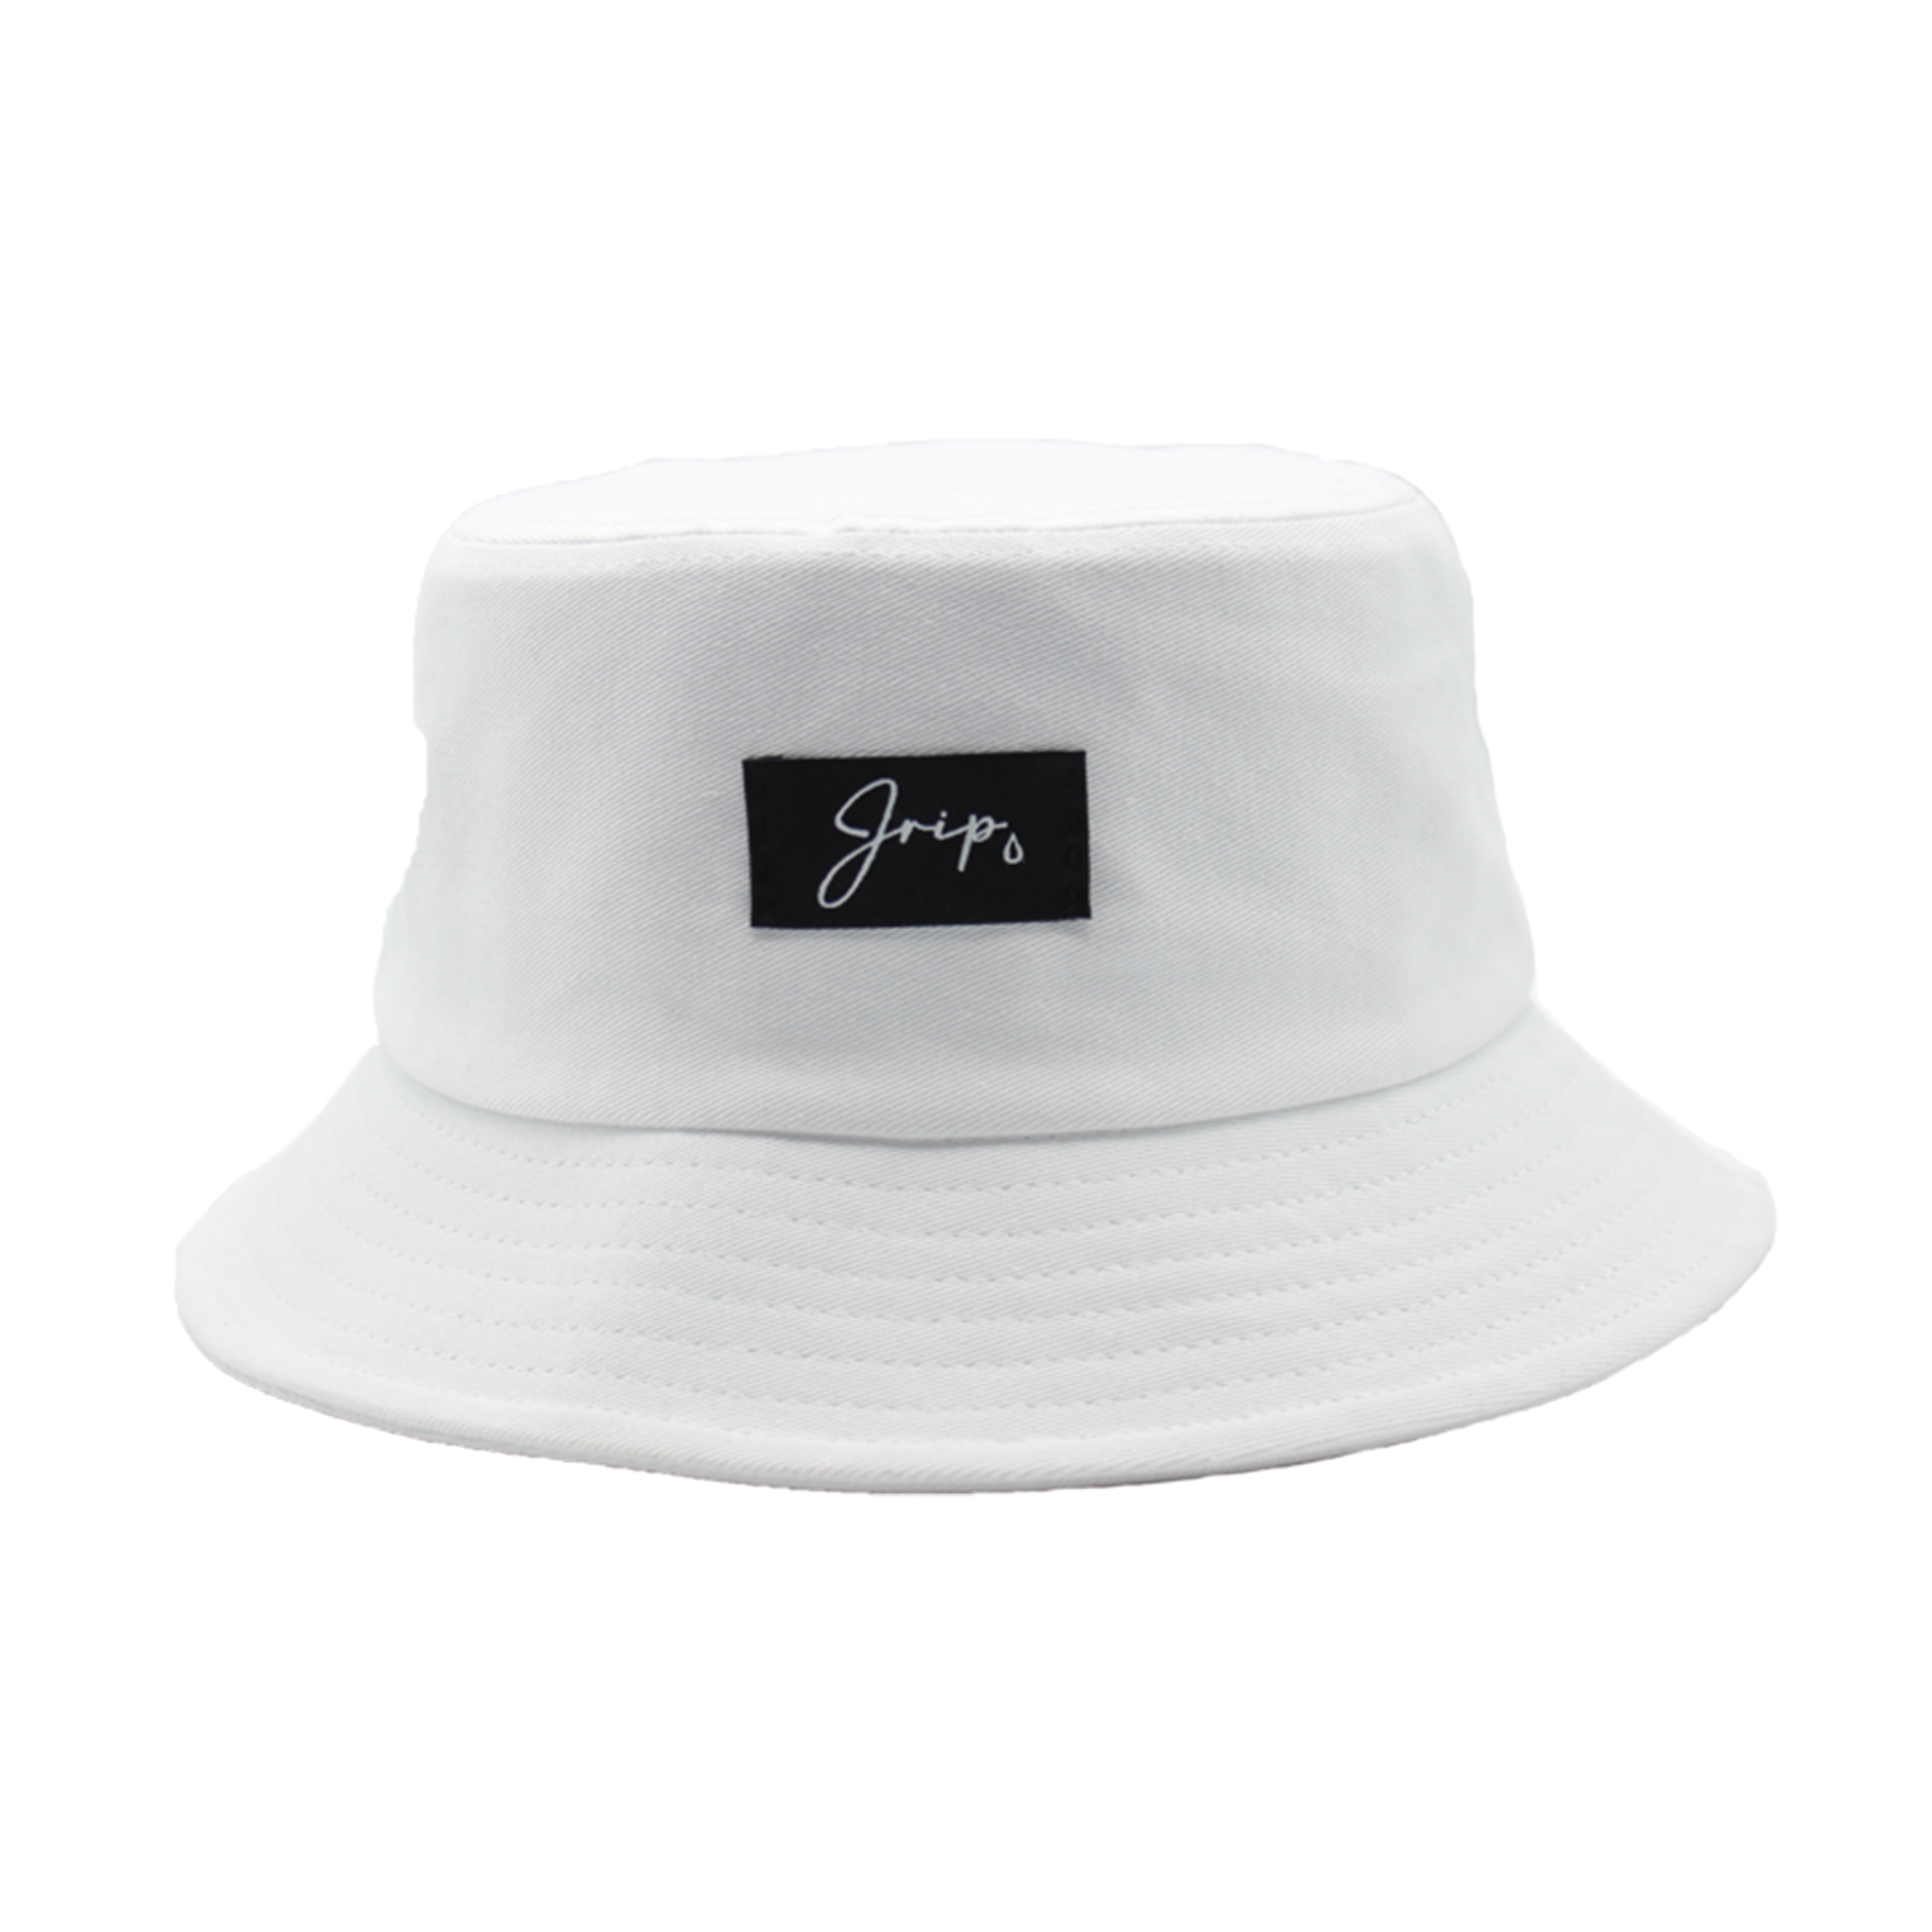 Jrip Bucket Hat (WHITE)